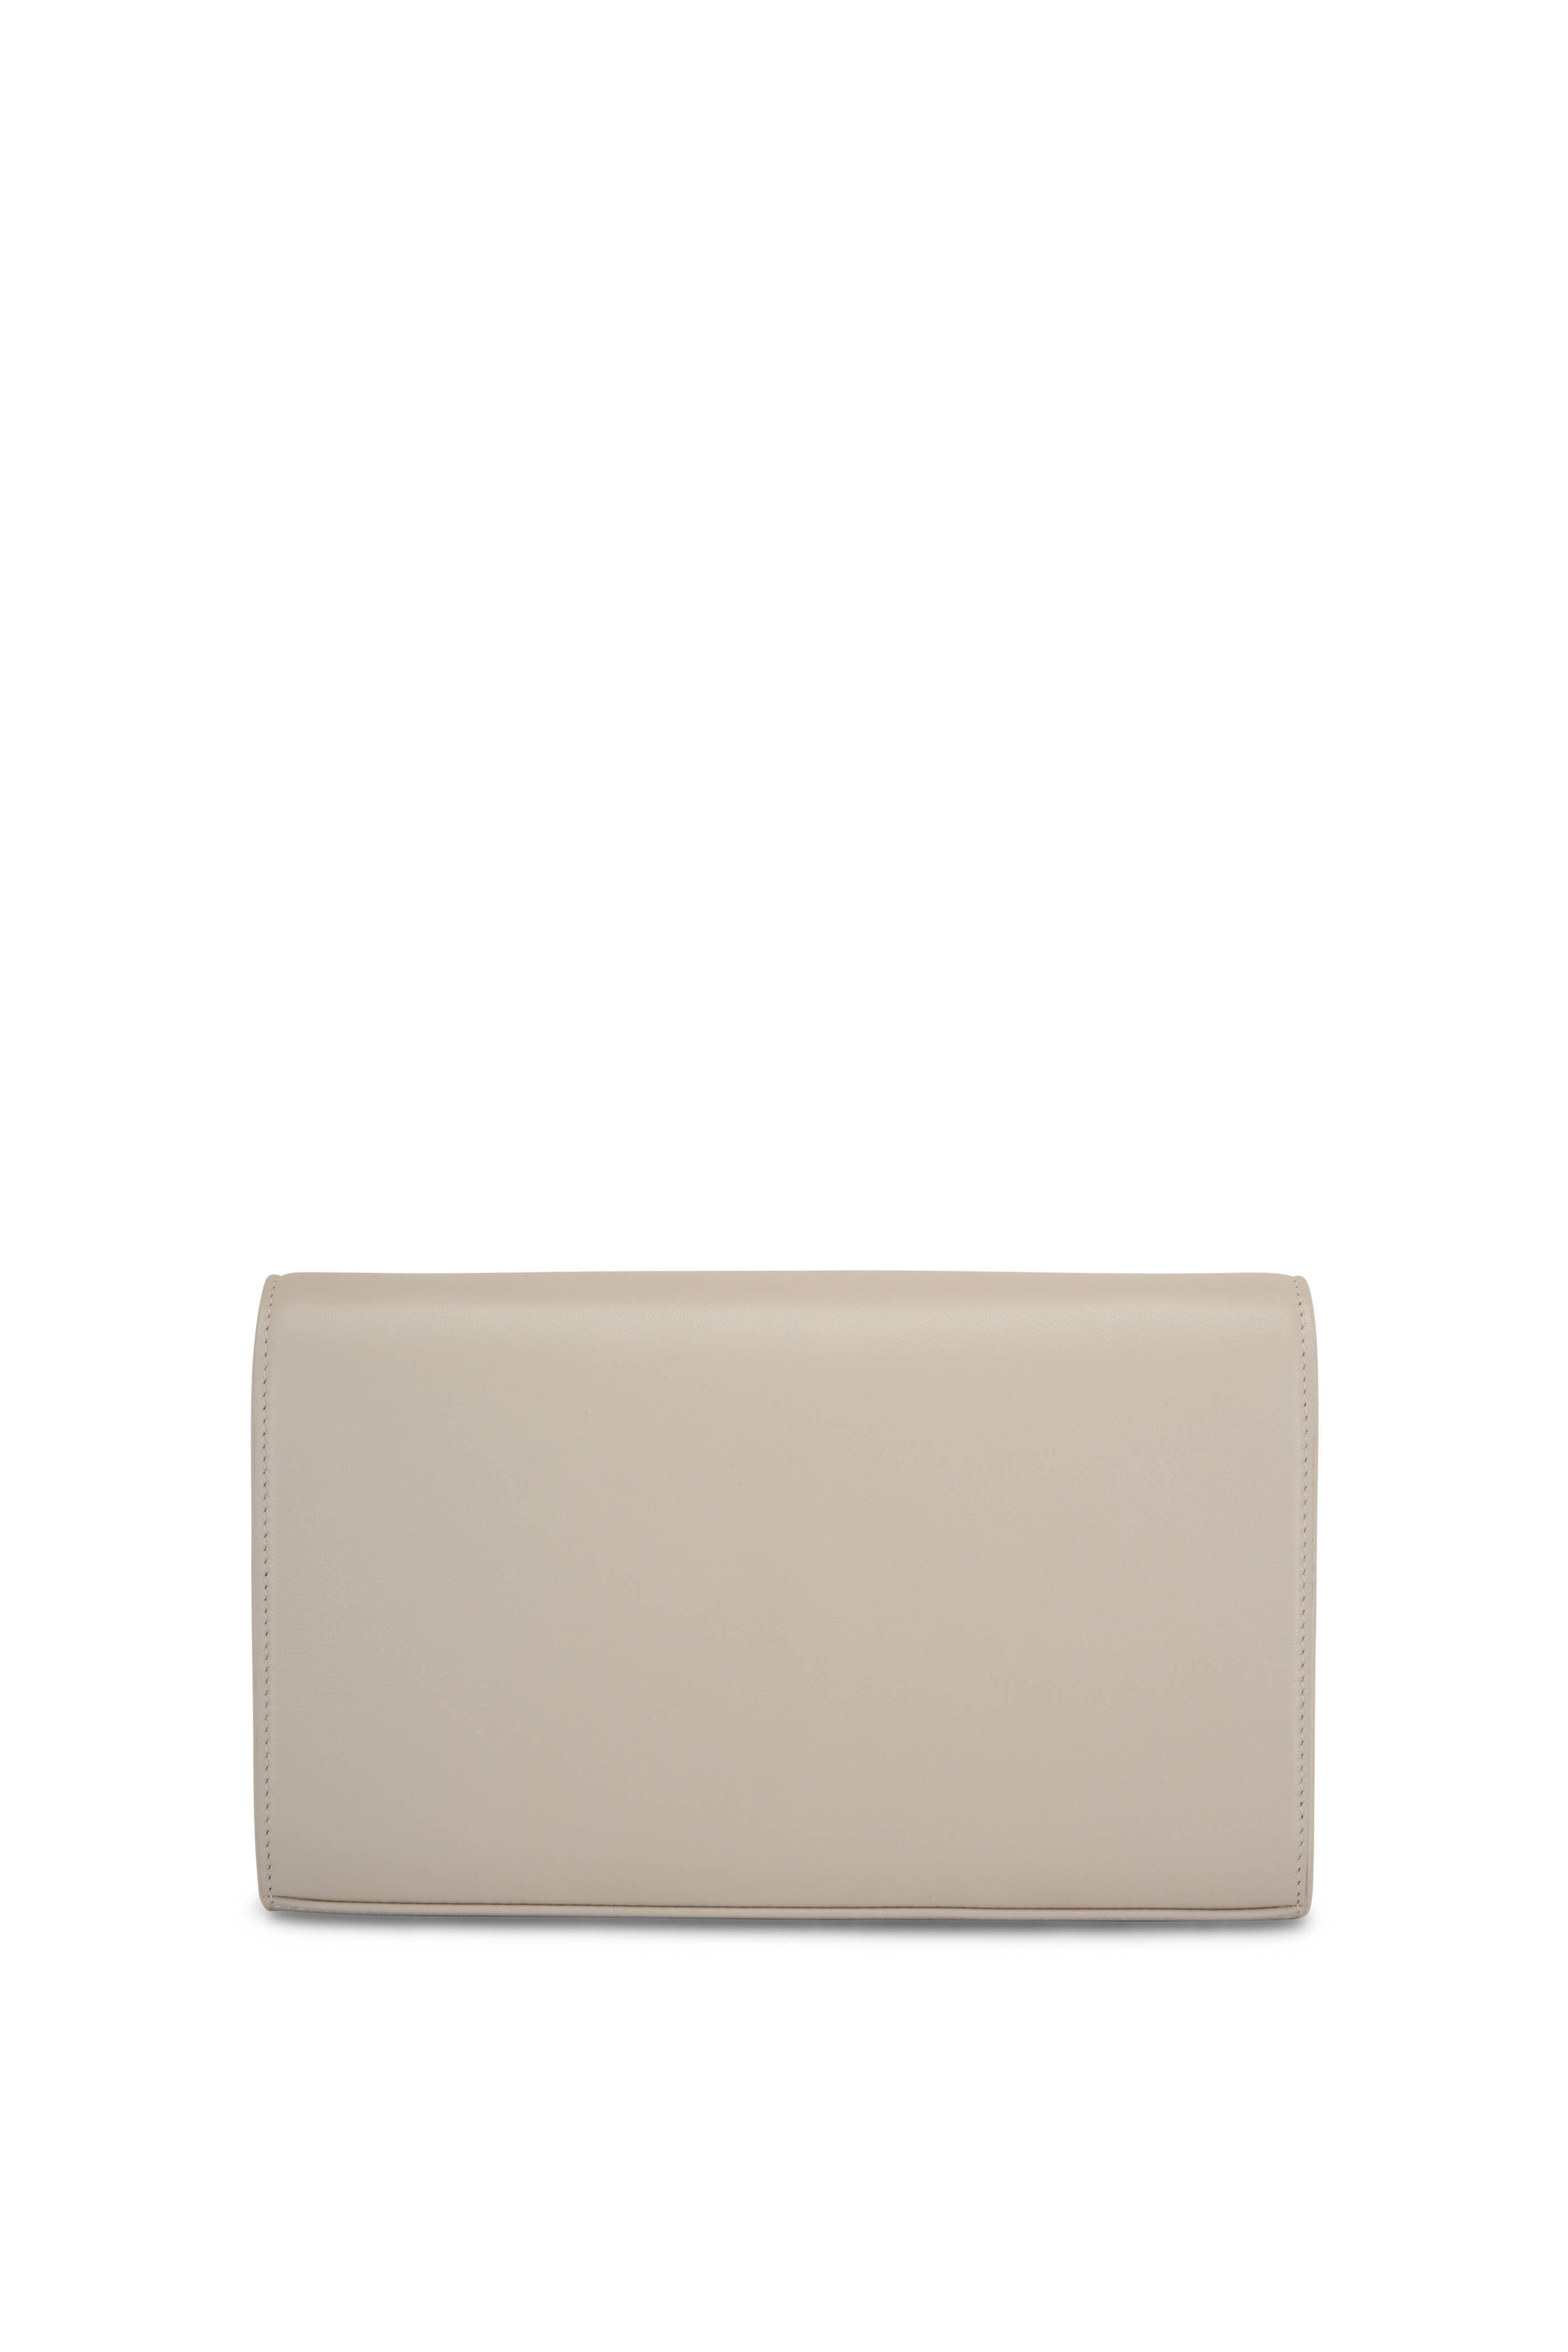 Saint Laurent Tricolor Ysl Monogram Nappa Leather Wallet on Chain Crema Soft Trigal